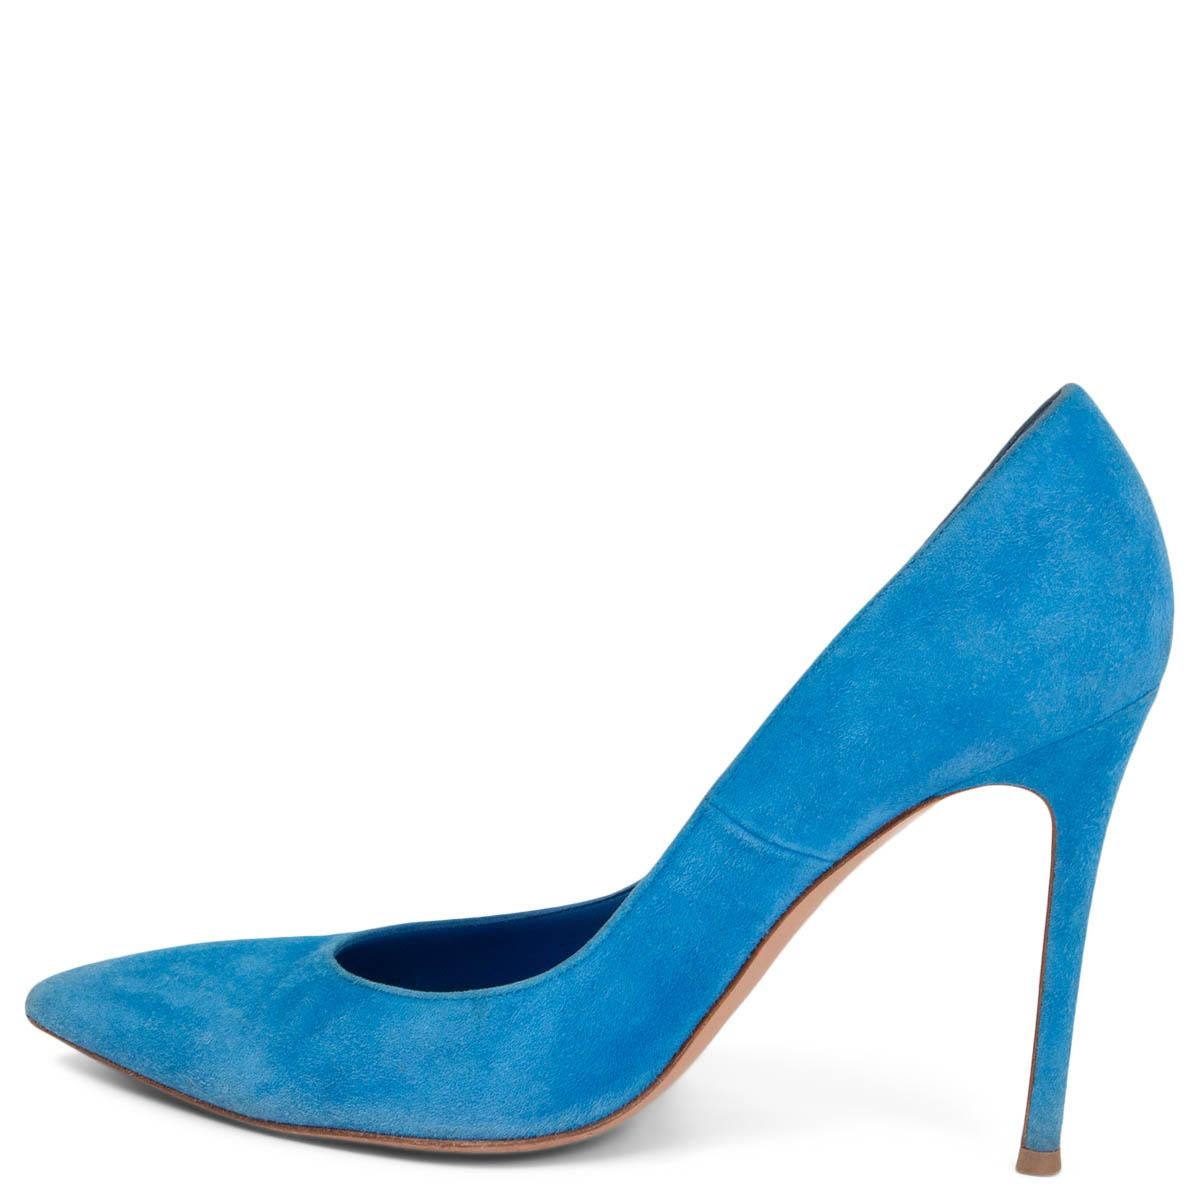 Bleu Chaussures à talons GIANTVITO ROSSI 105 en daim bleu azur GIANVITO, taille 38 en vente